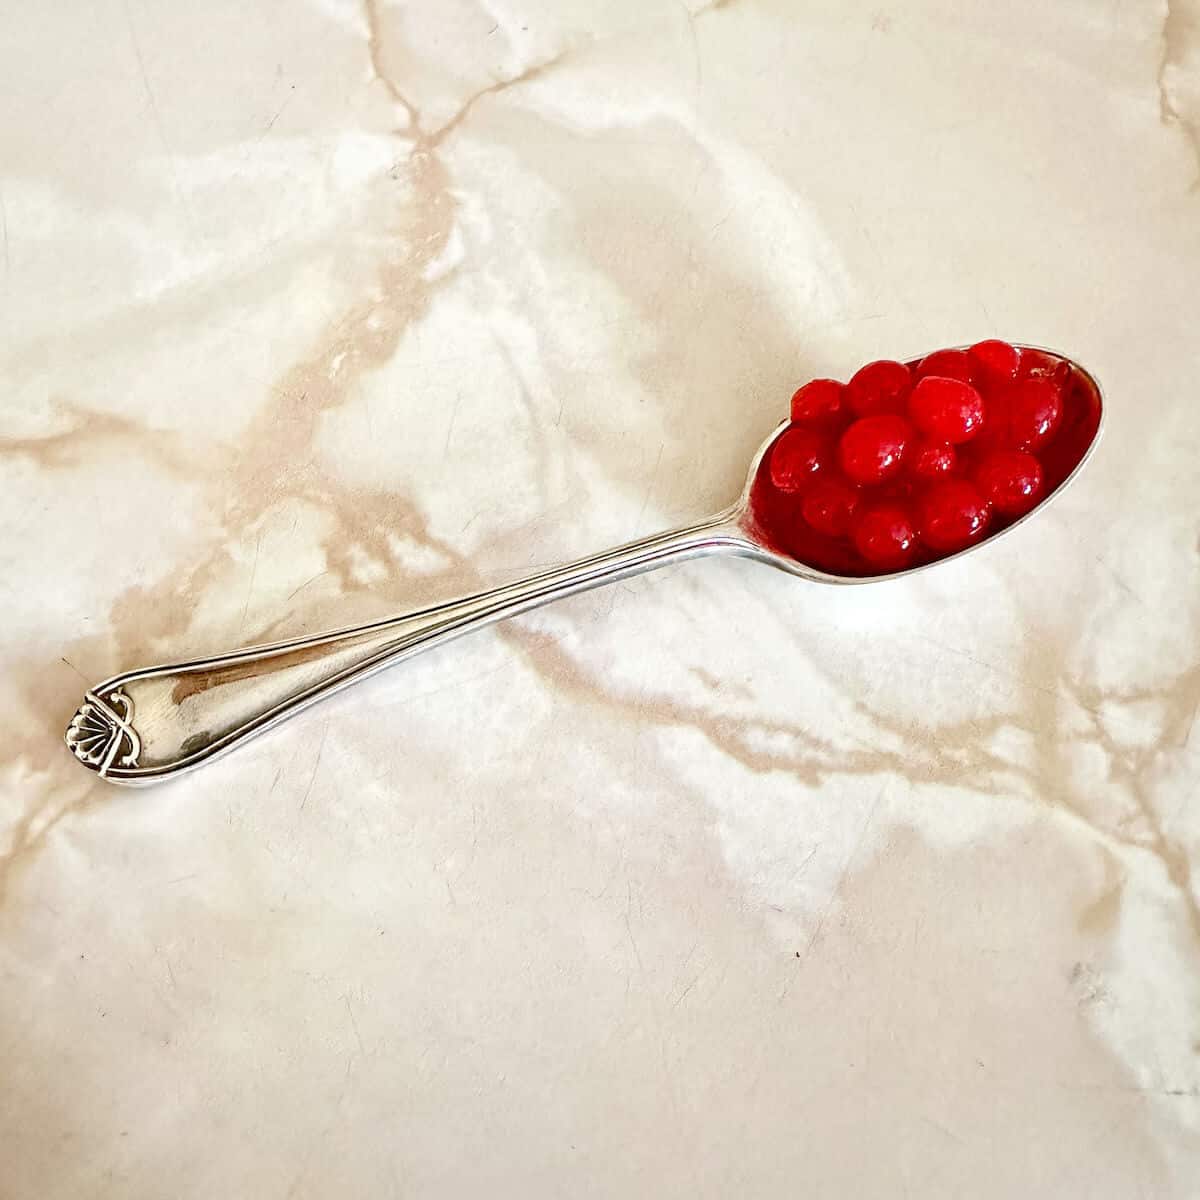 A teaspoon full of raspberry caviar to use as a garnish.